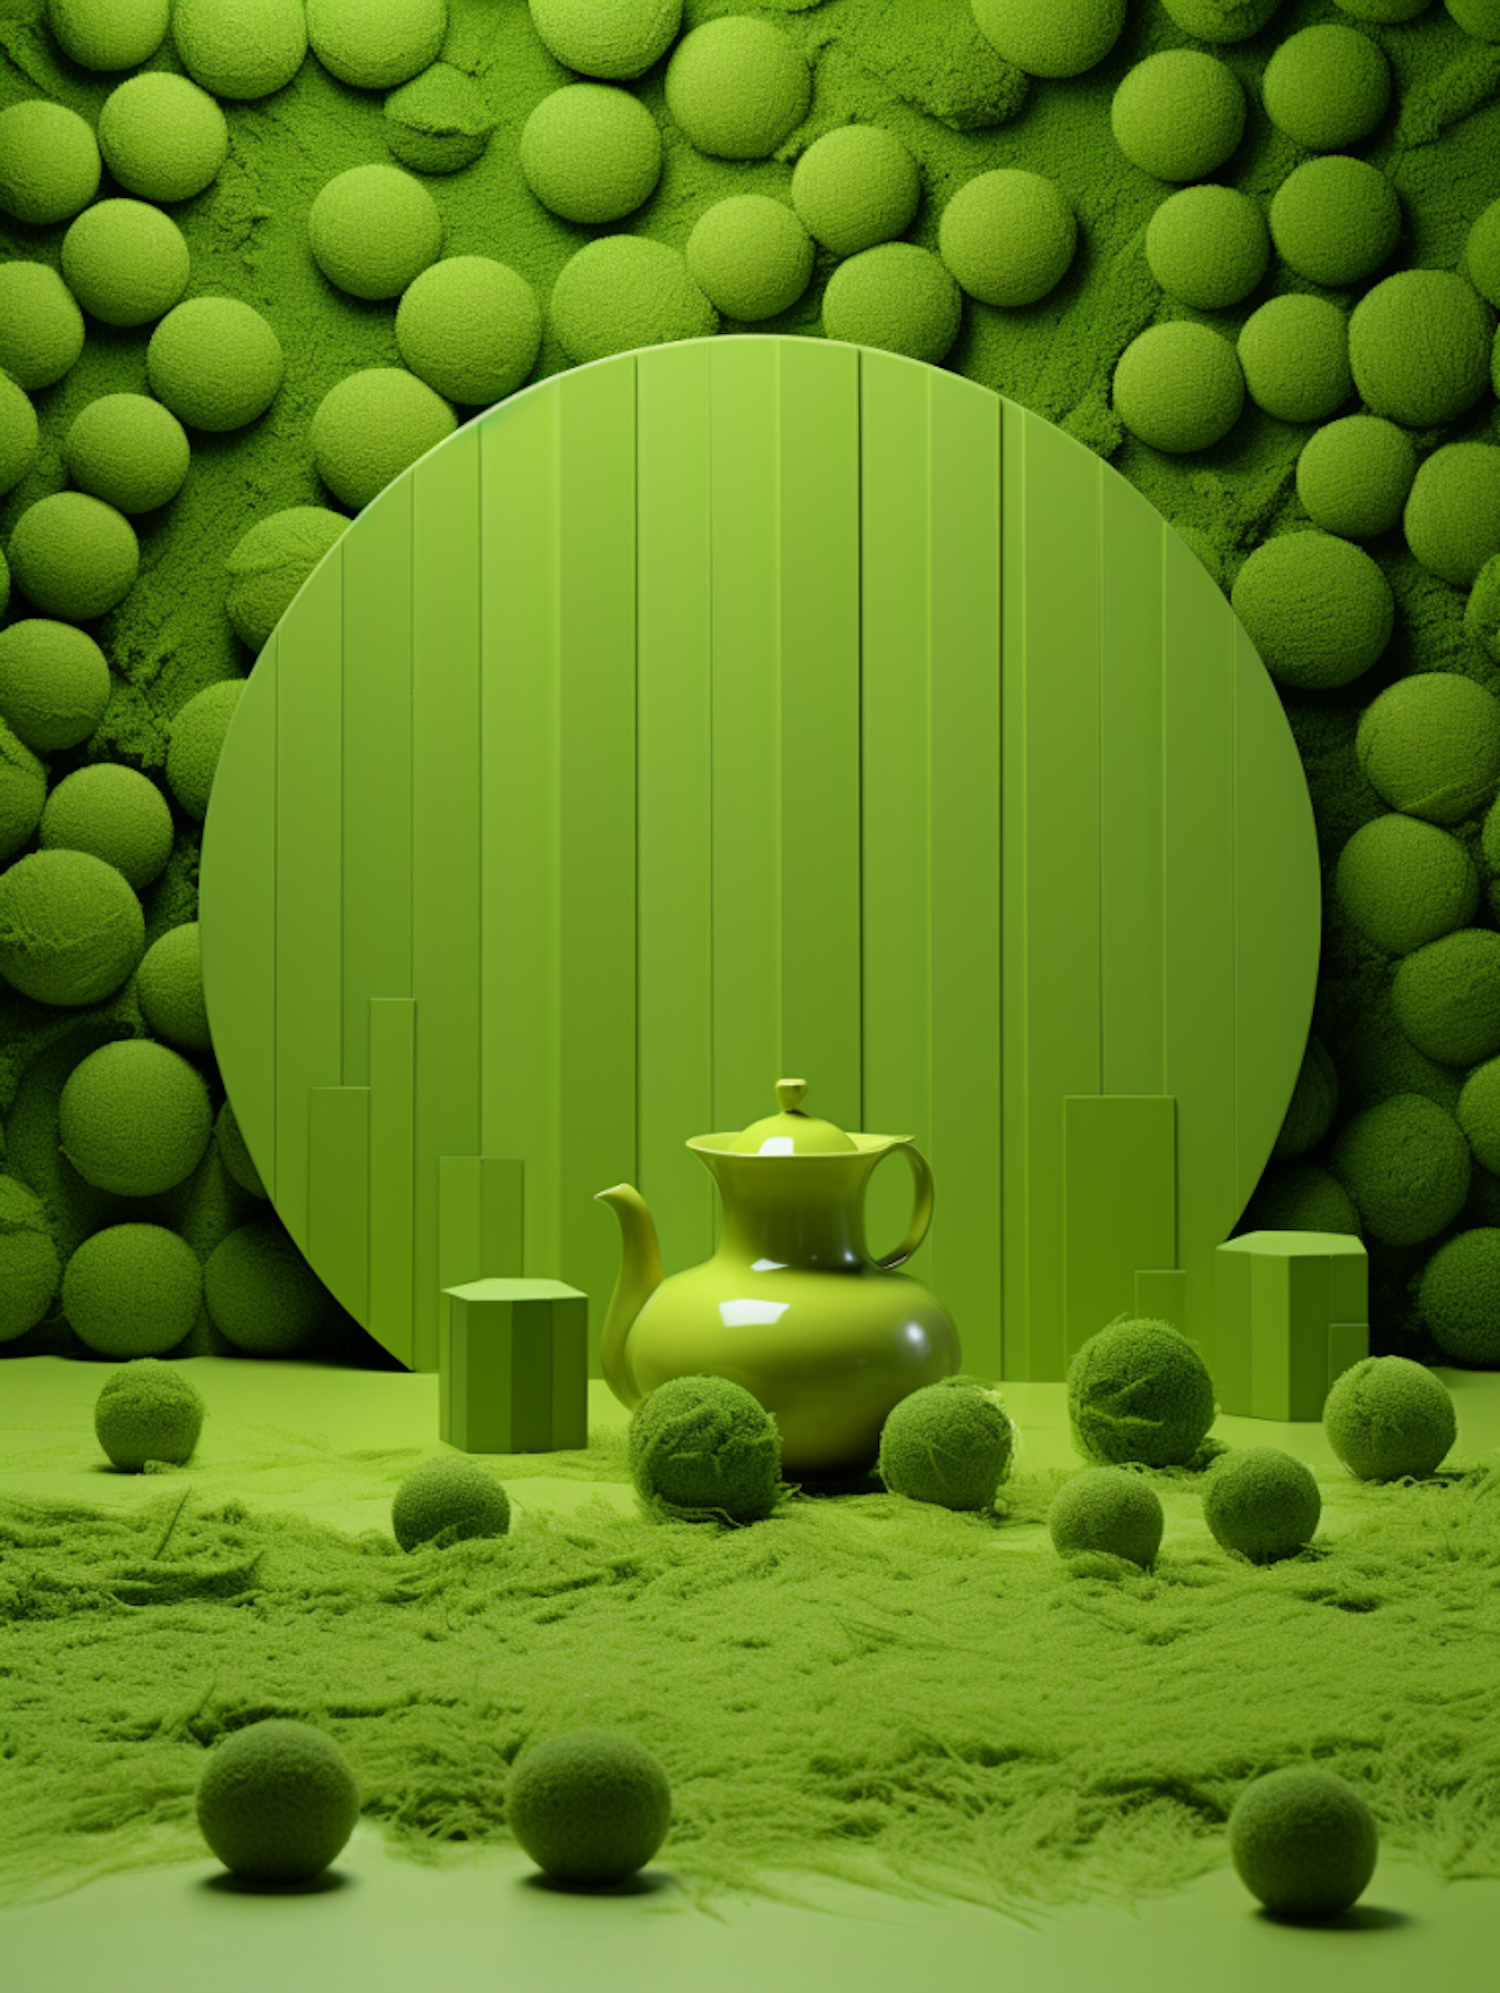 The Golden Teapot in a Monochrome Green Dreamscape